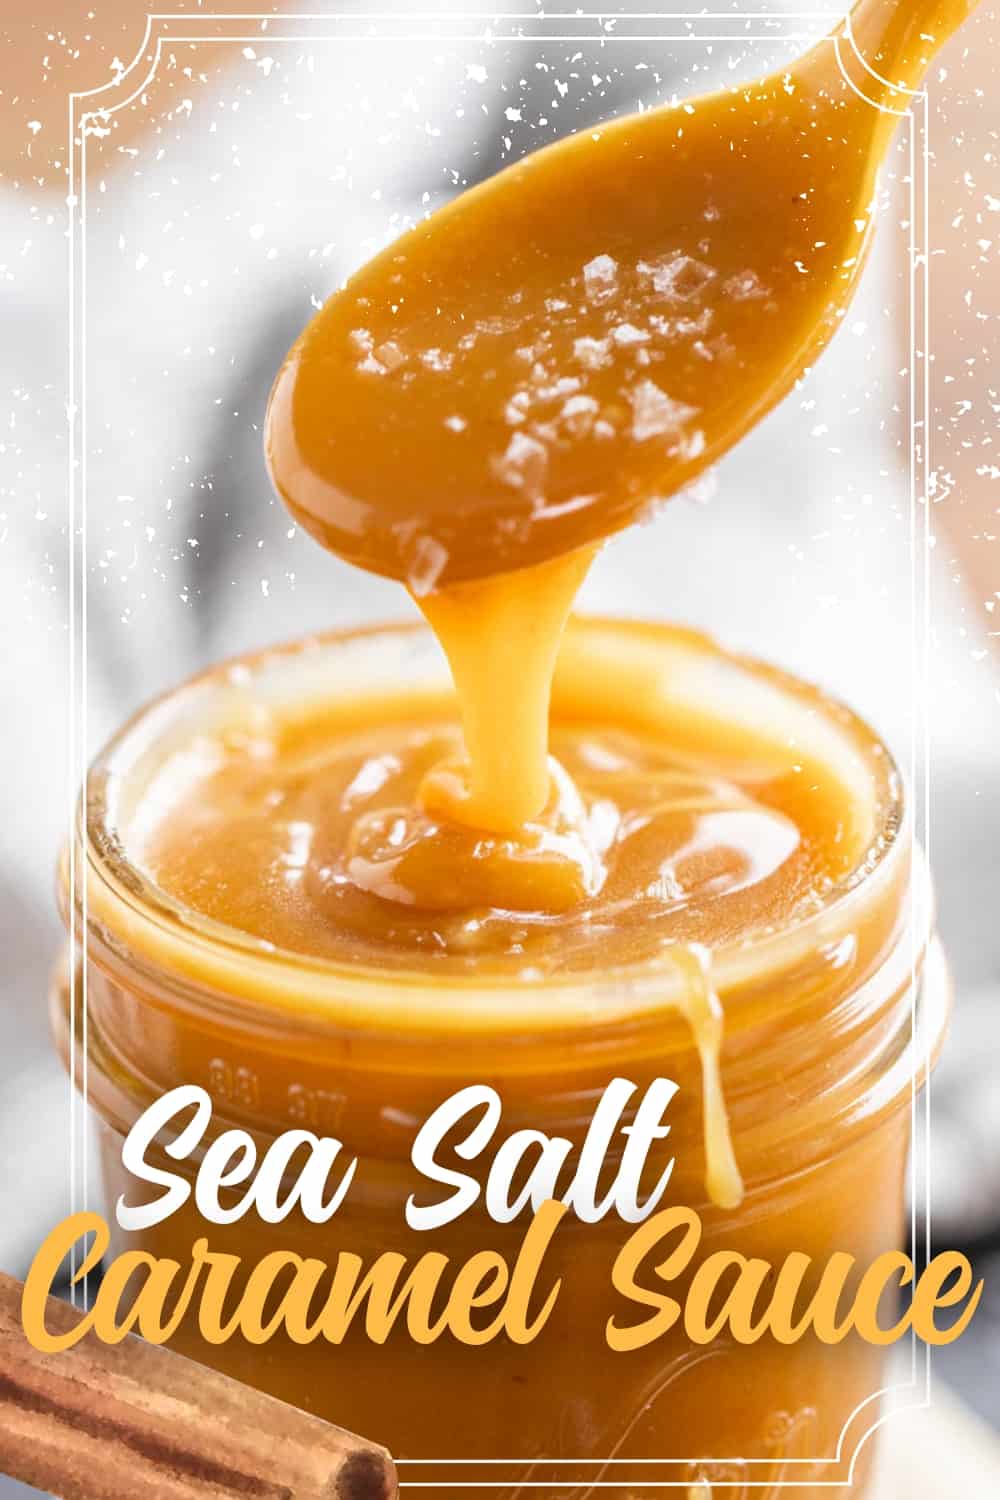 Sea Salt Caramel Sauce